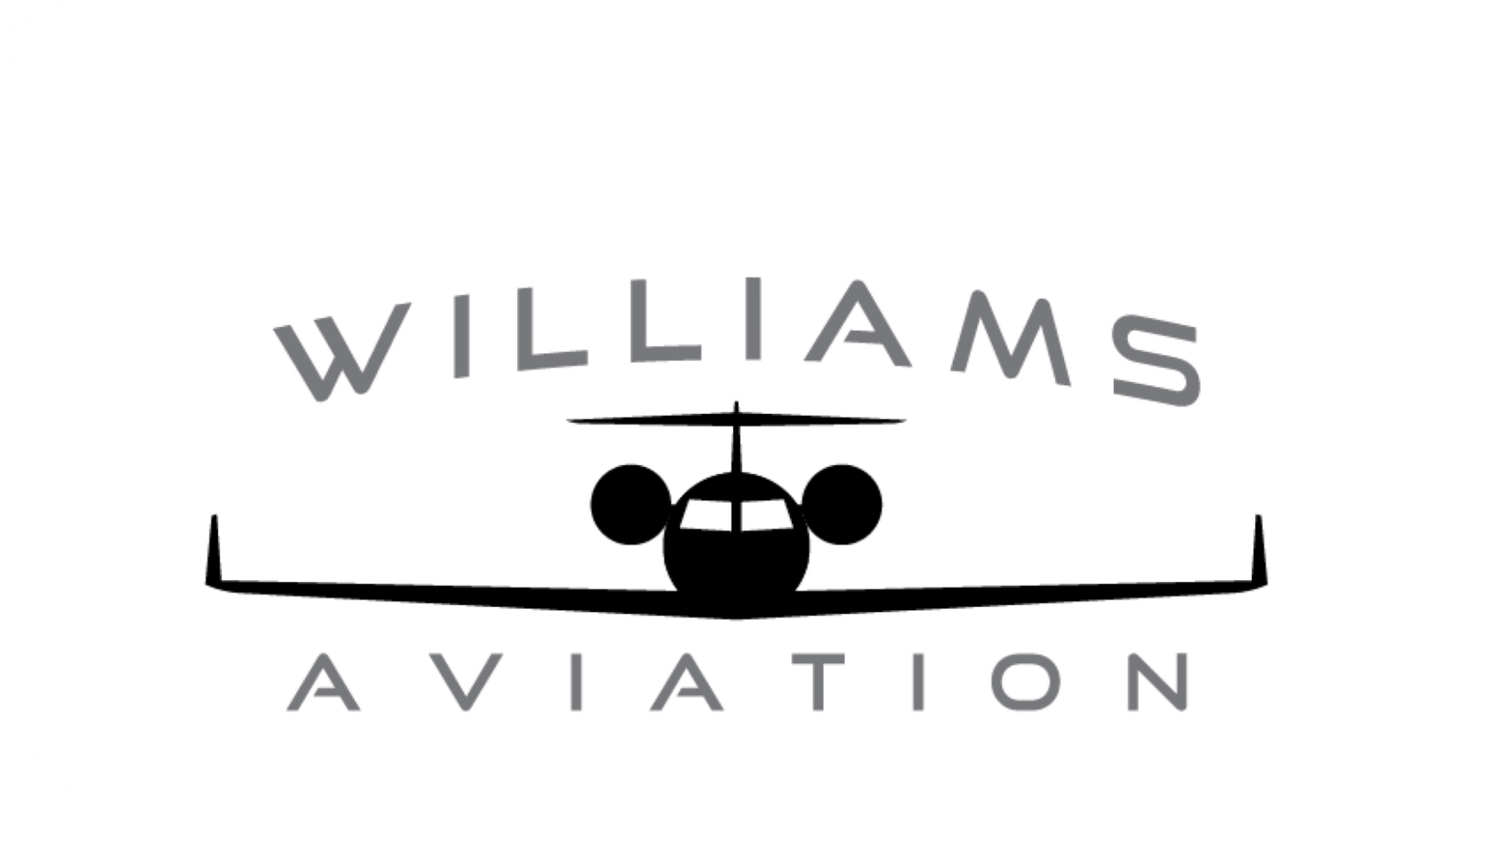 Williams Aviation Solutions